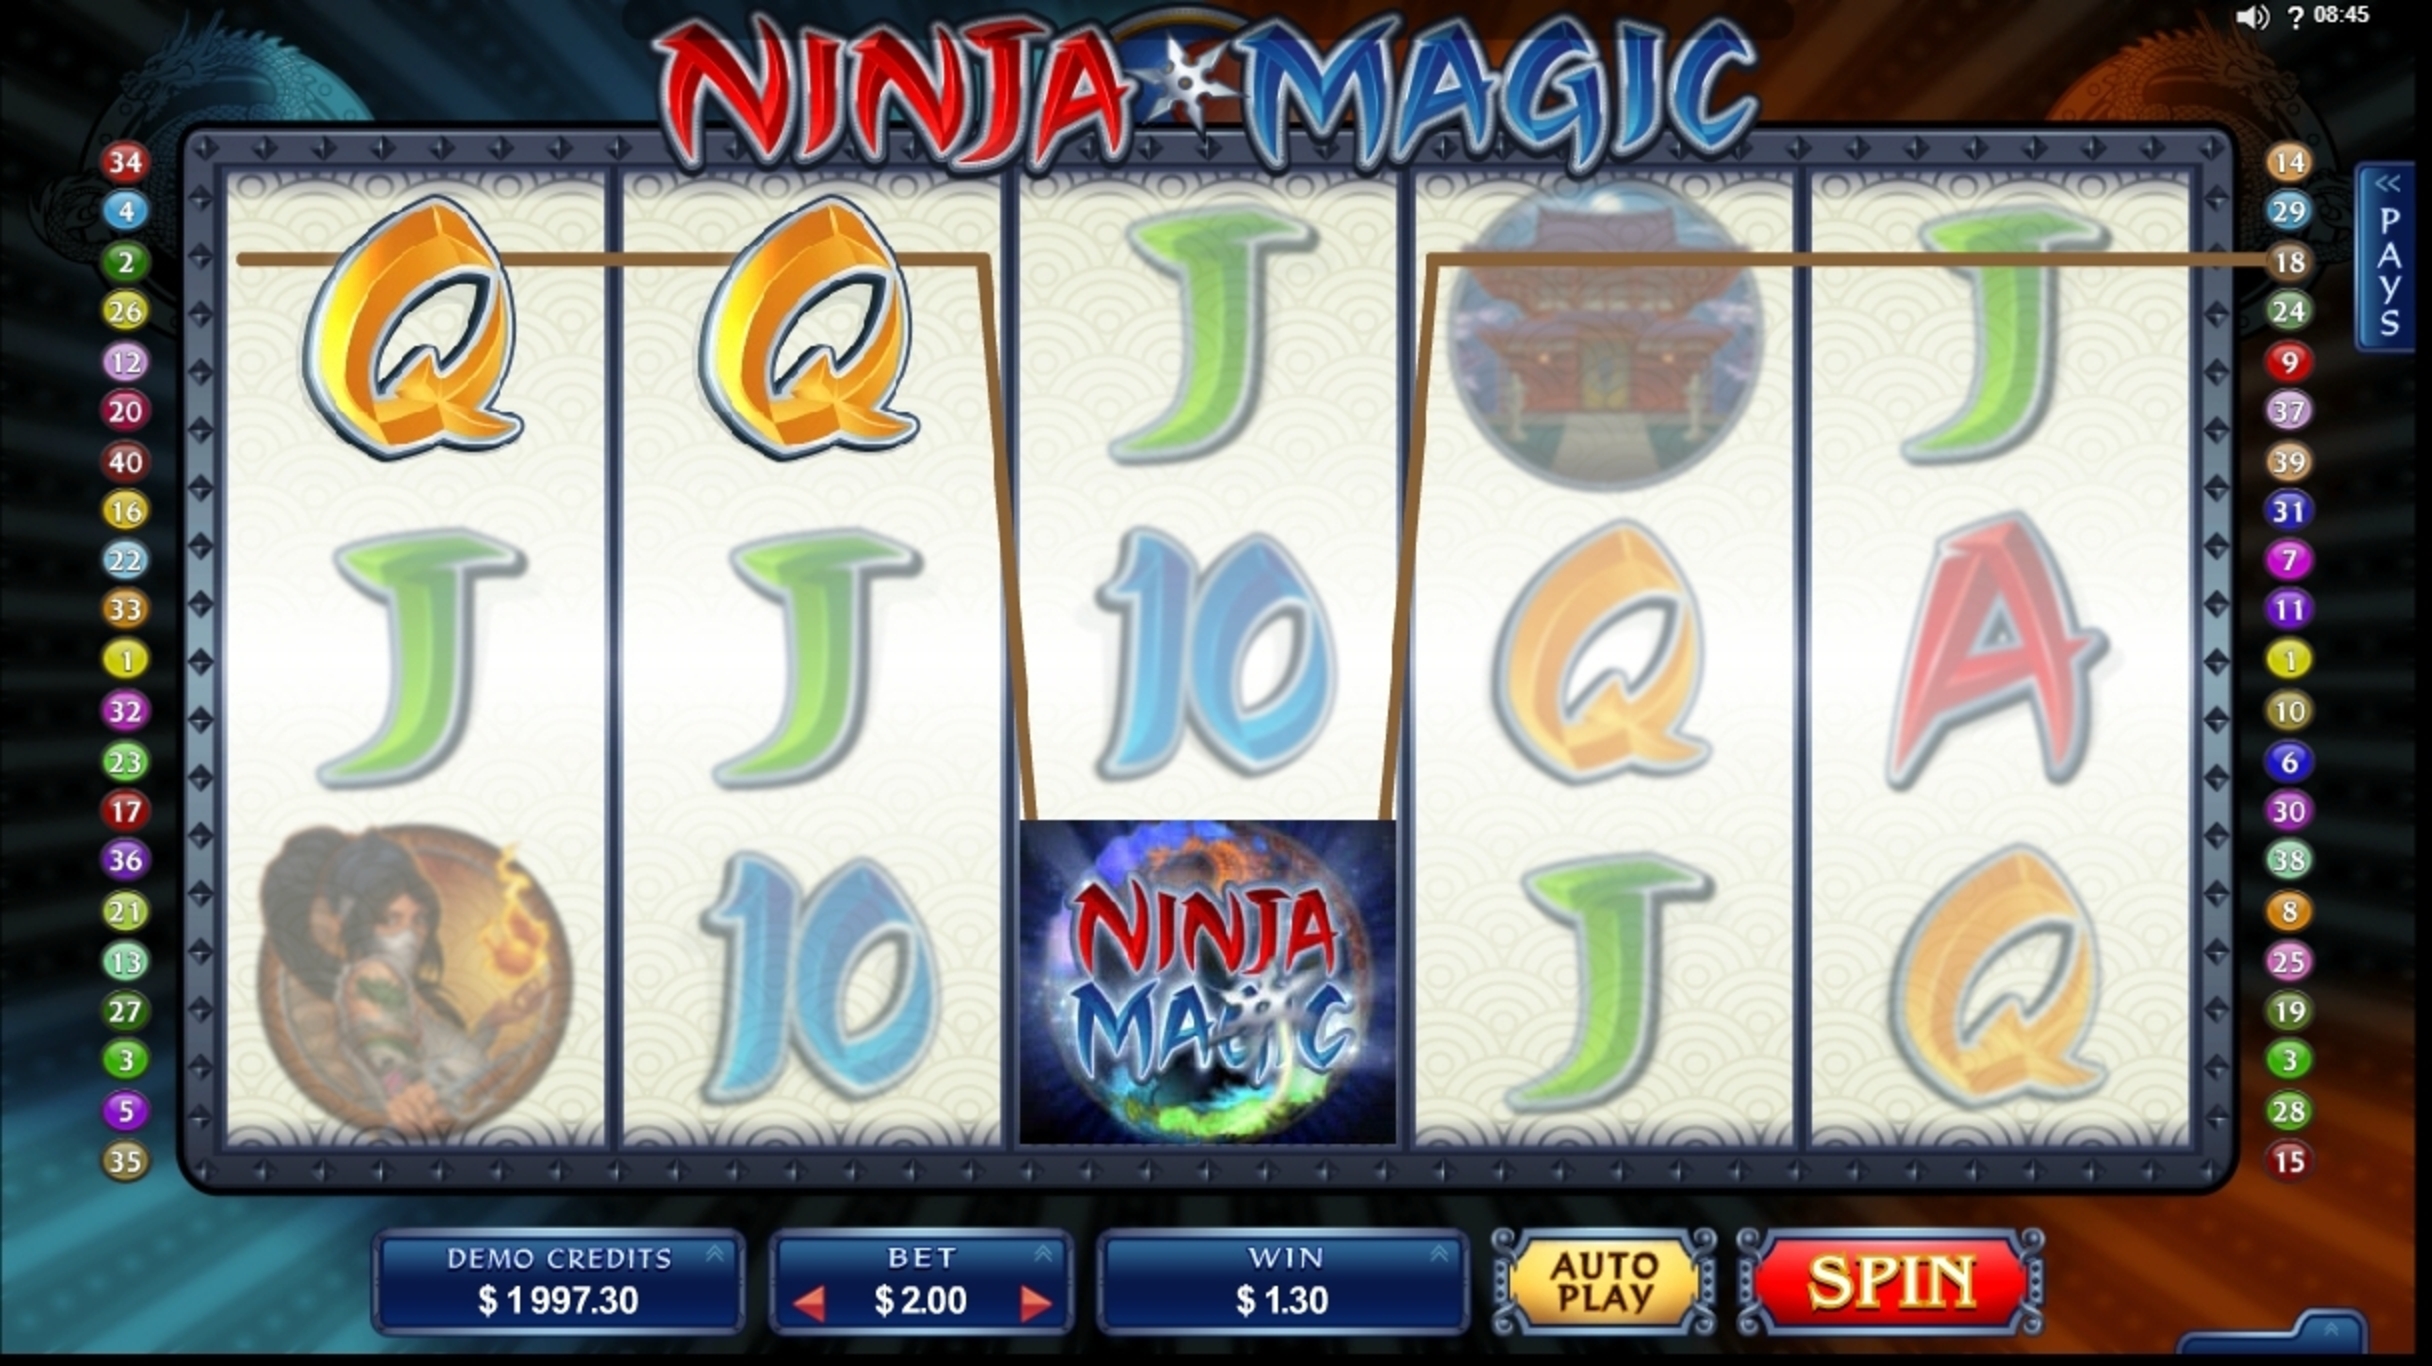 Win Money in Ninja Magic Free Slot Game by MahiGaming